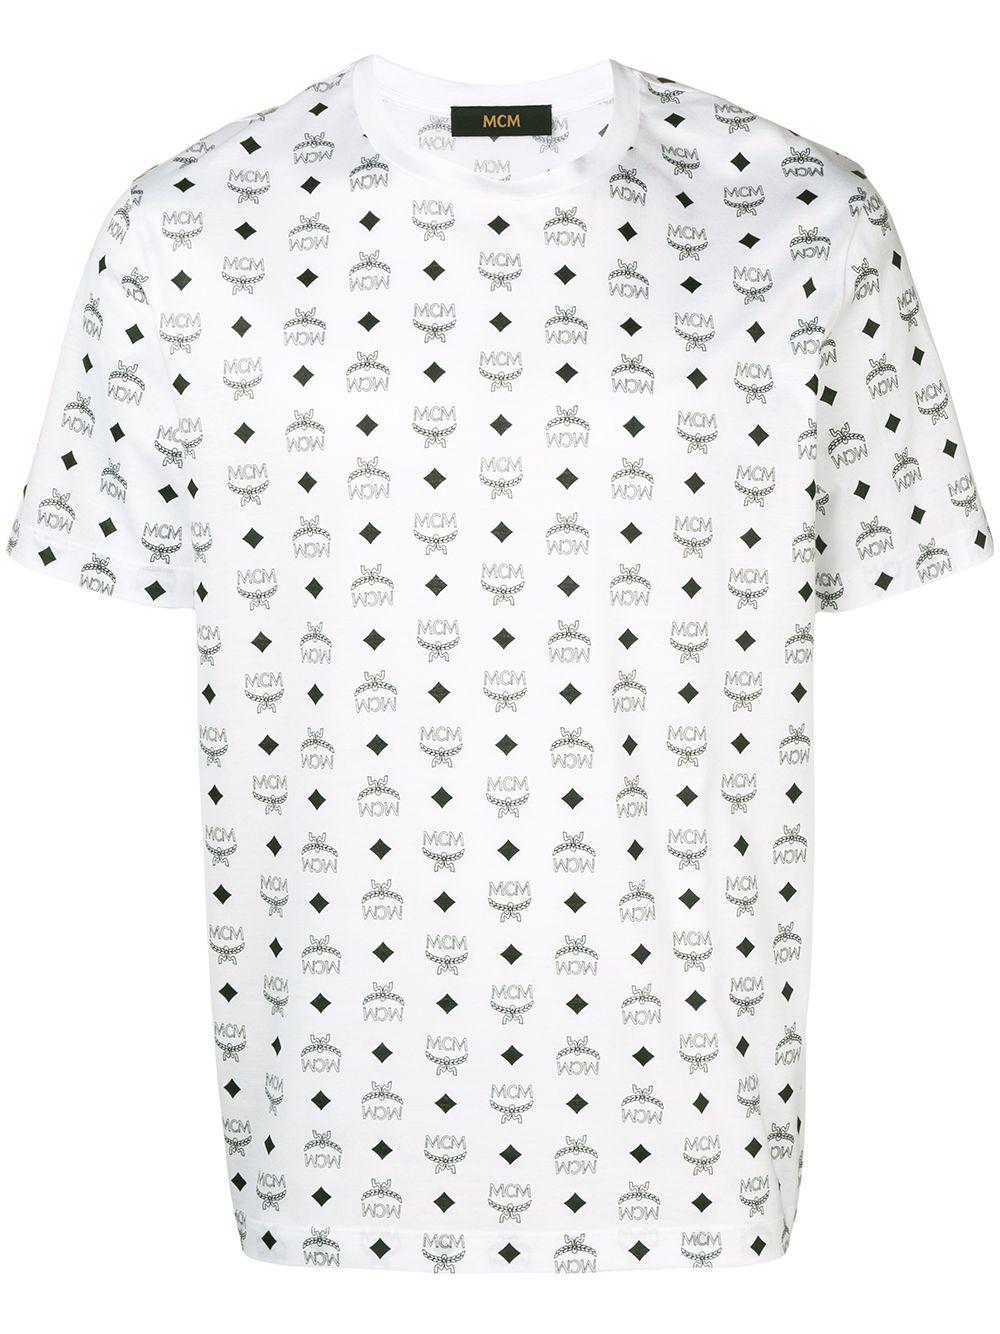 MCM Cotton Visetos Print T-shirt in White for Men - Lyst